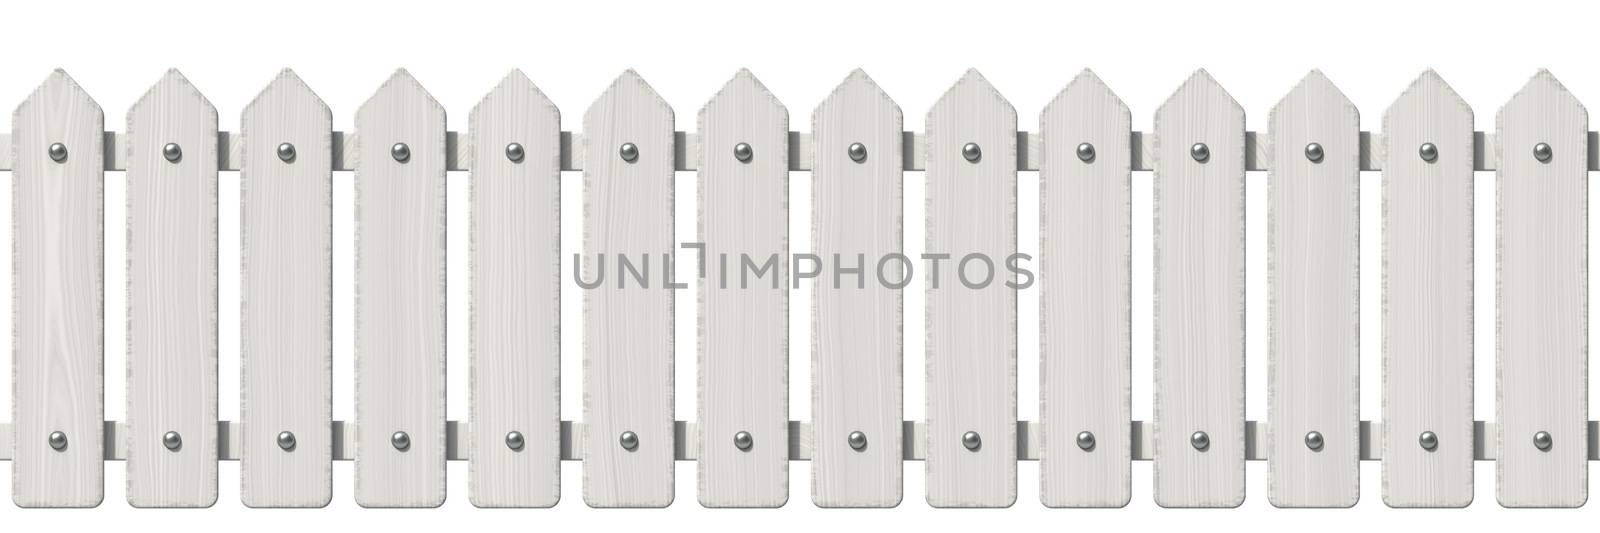 White wooden fence 3D render illustration isolated on white background